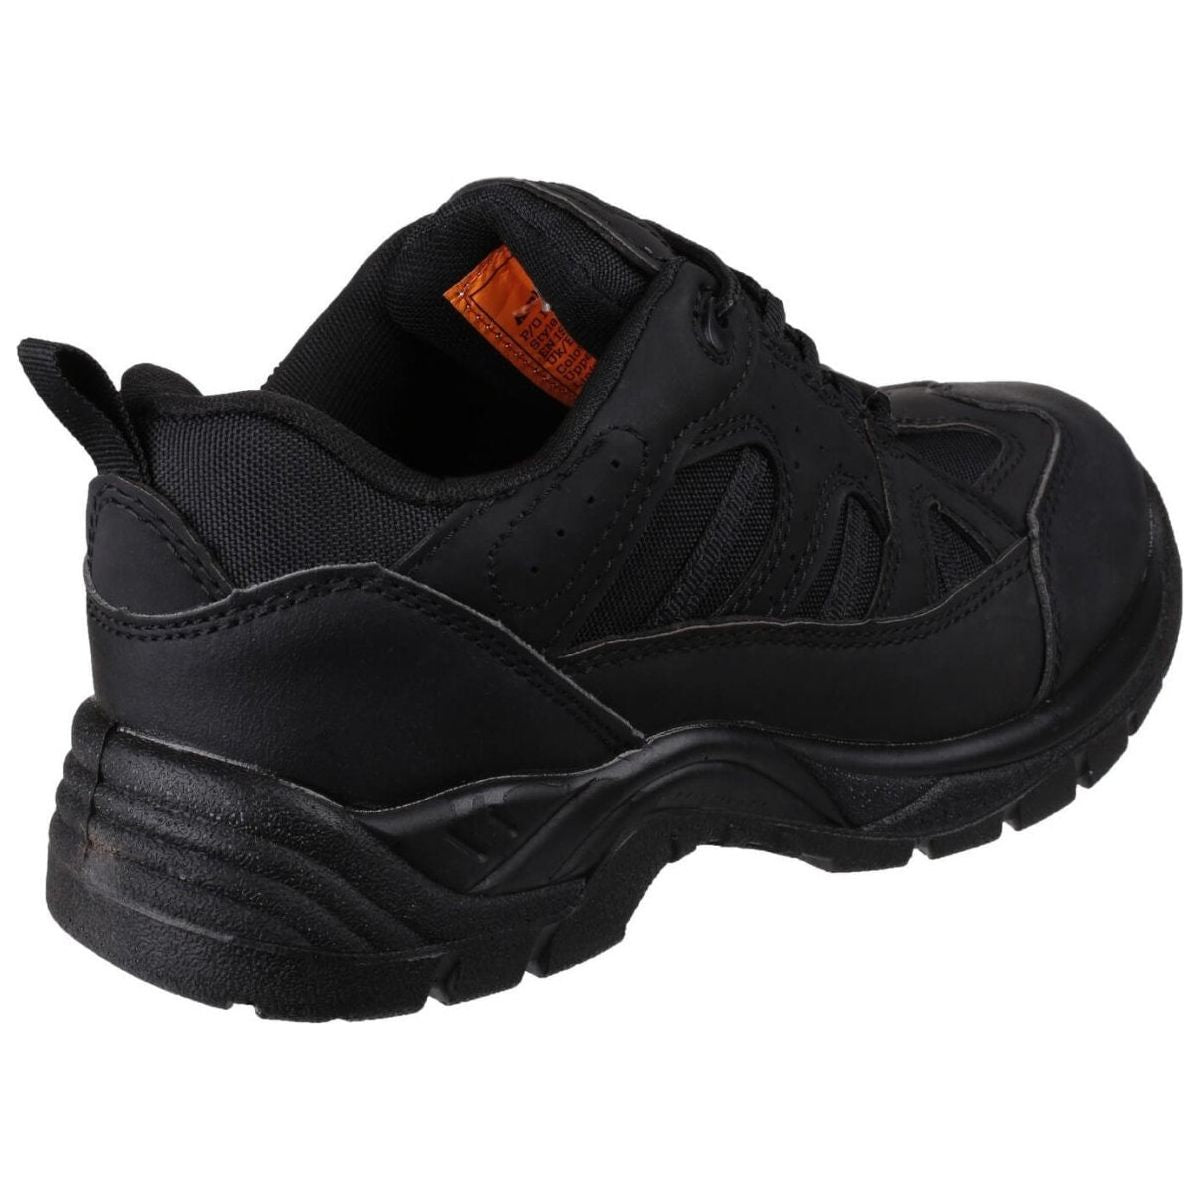 Amblers Fs214 Vegan Safety Shoes Womens - workweargurus.com